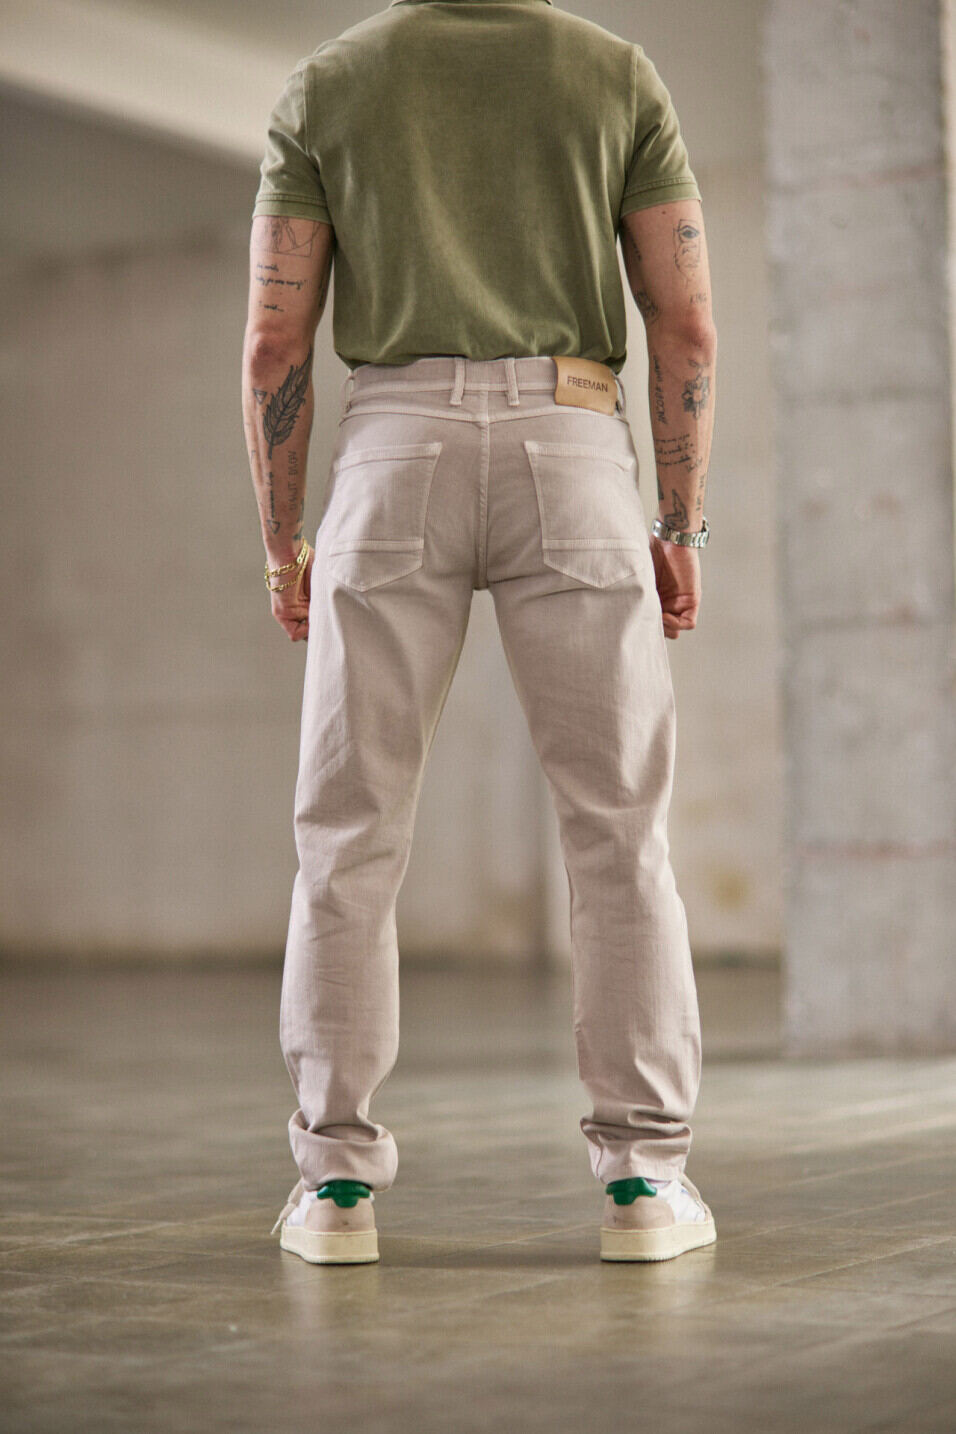 Jeans droit ajusté Homme Jimmy California Simply taupe | Freeman T. Porter